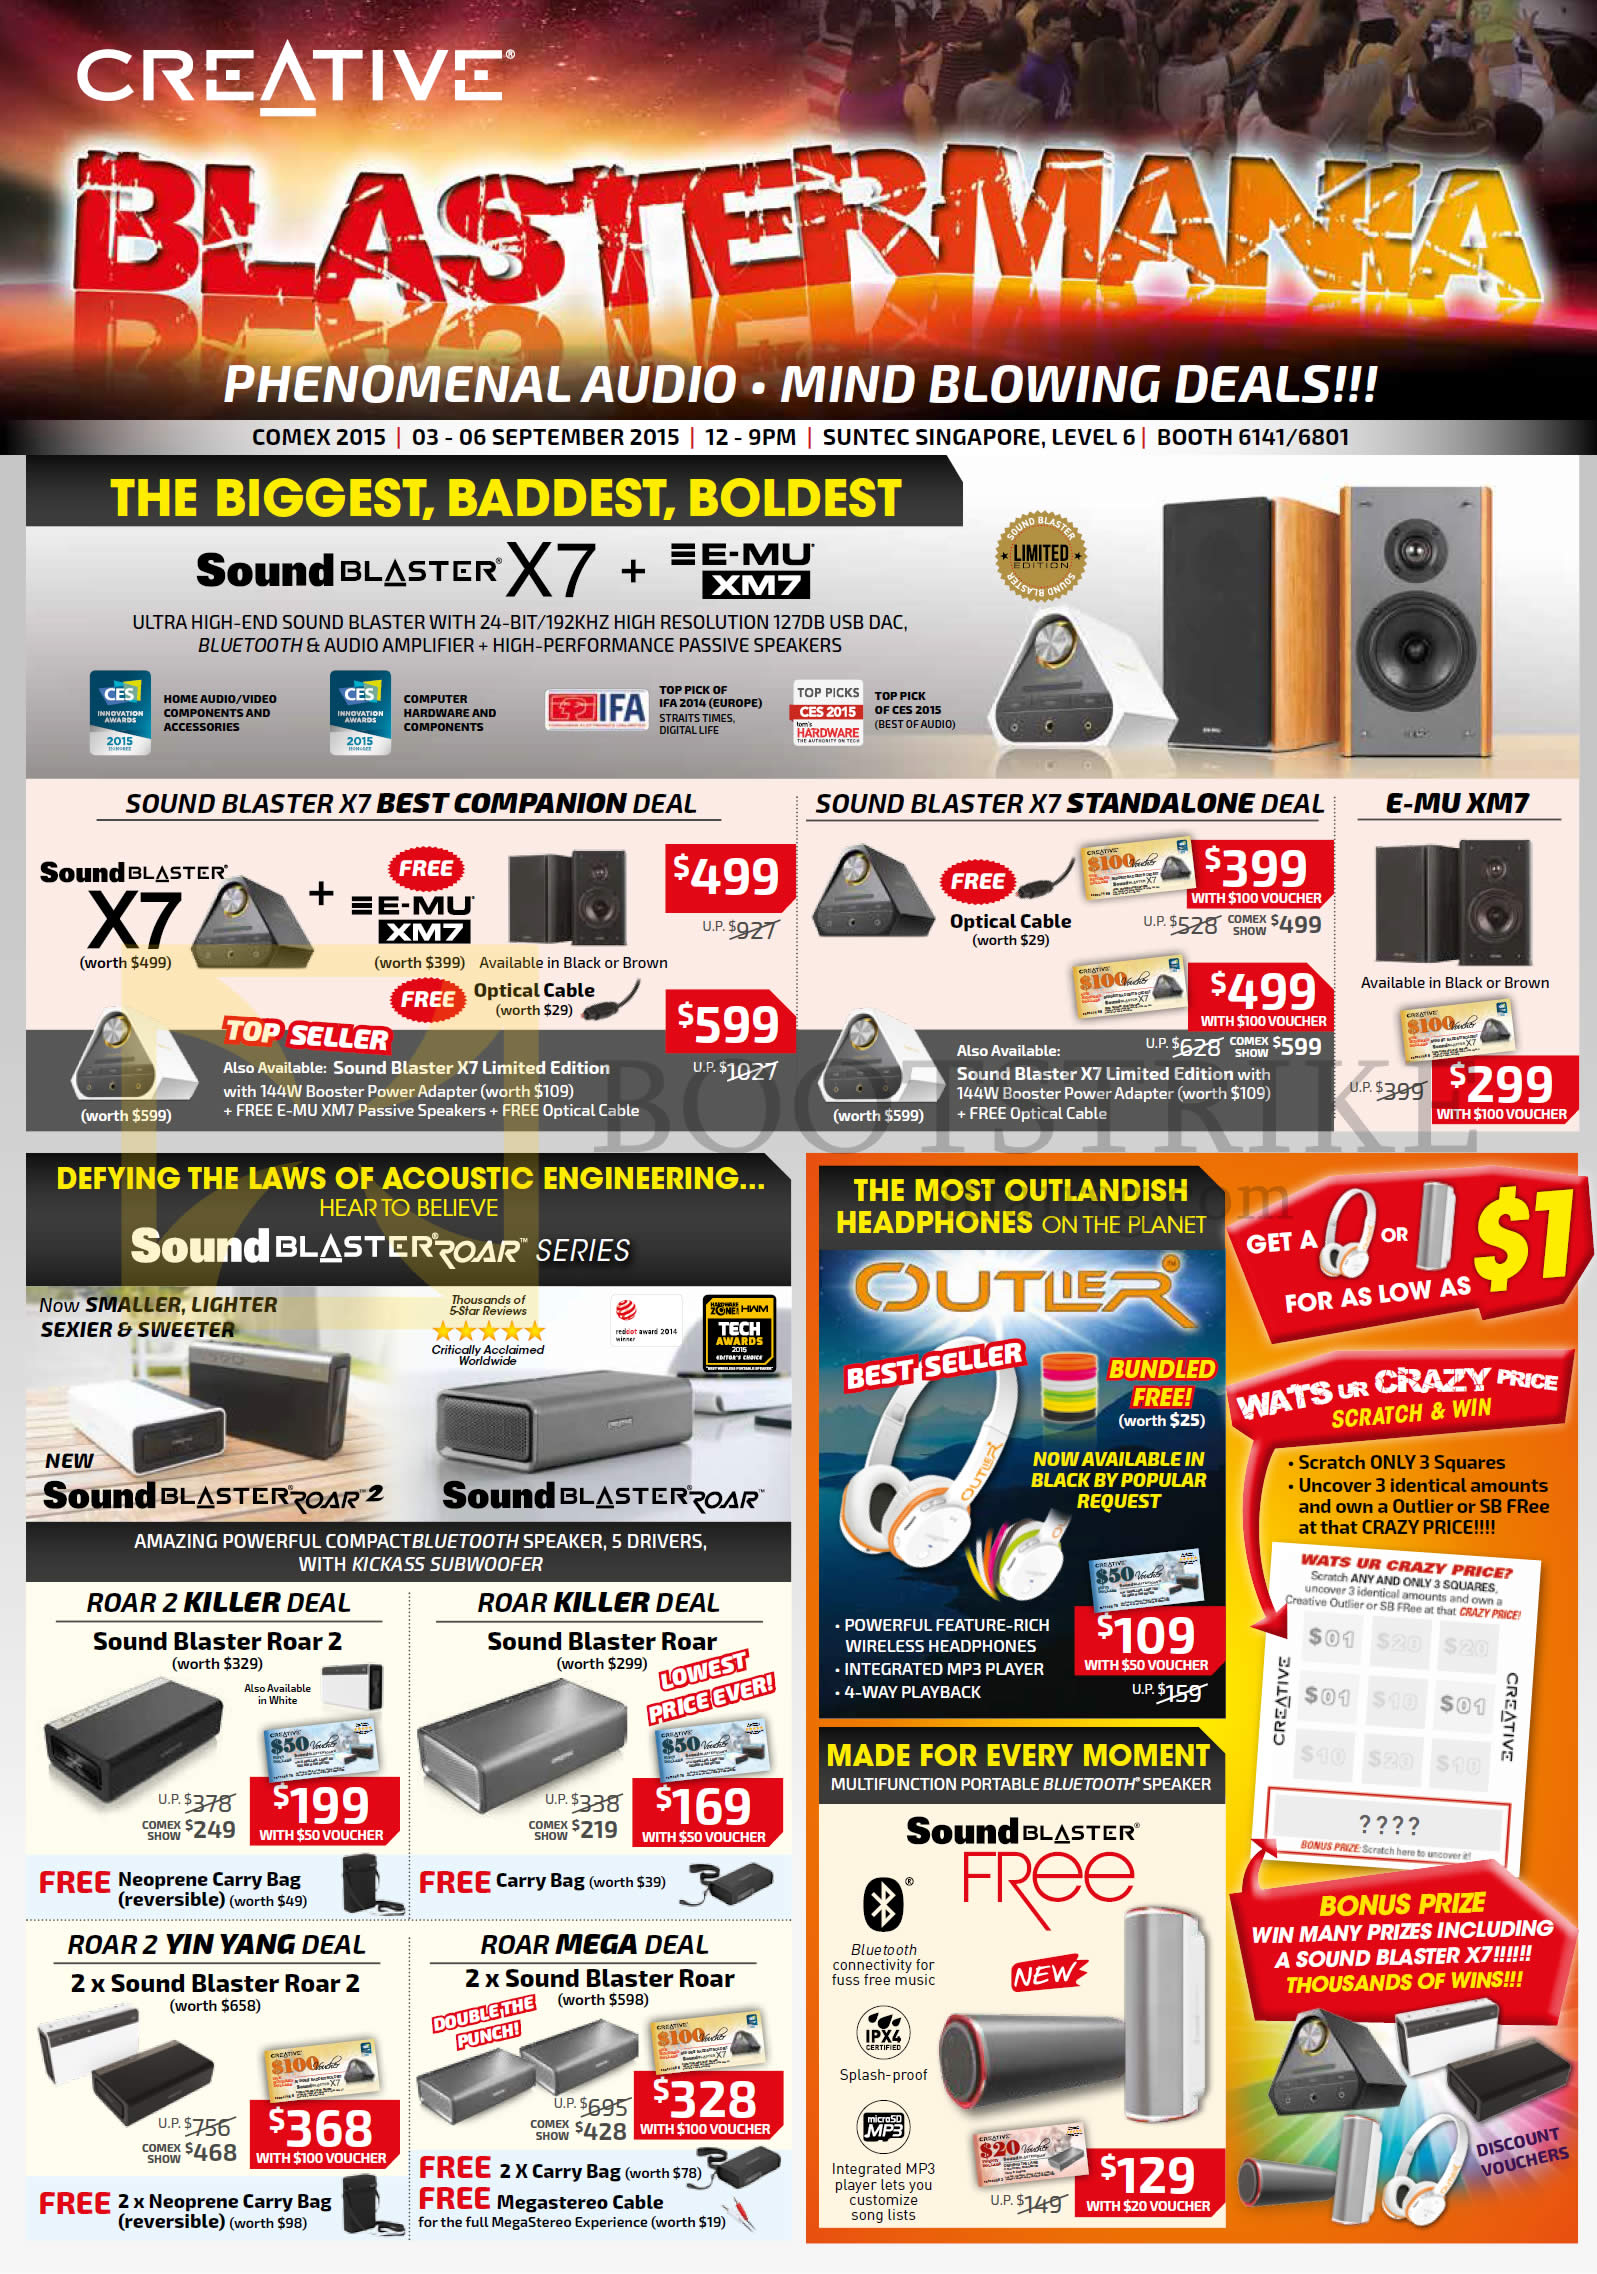 COMEX 2015 price list image brochure of Creative Speakers SoundBlaster Series X7, Roar, Roar 2, Yin Yang, Mega